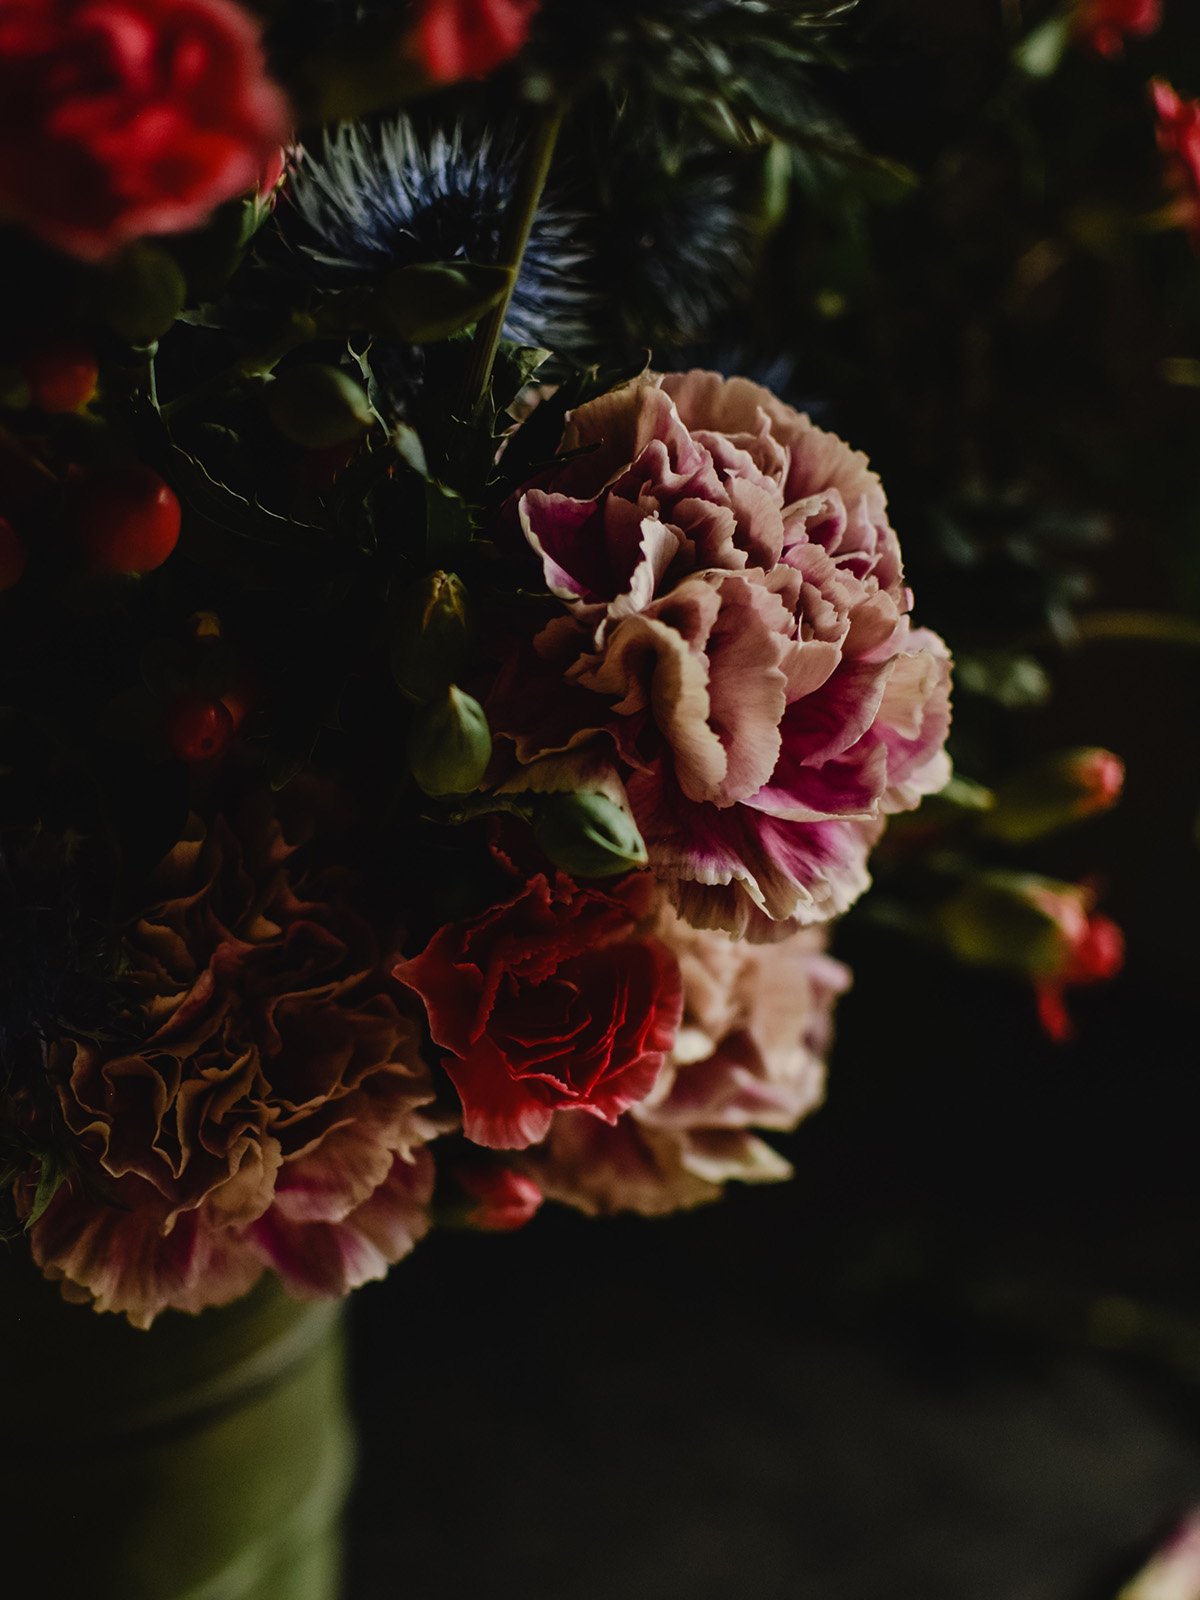 Dianthus Dark Pink close-up by Eva Elijas - on Thursd